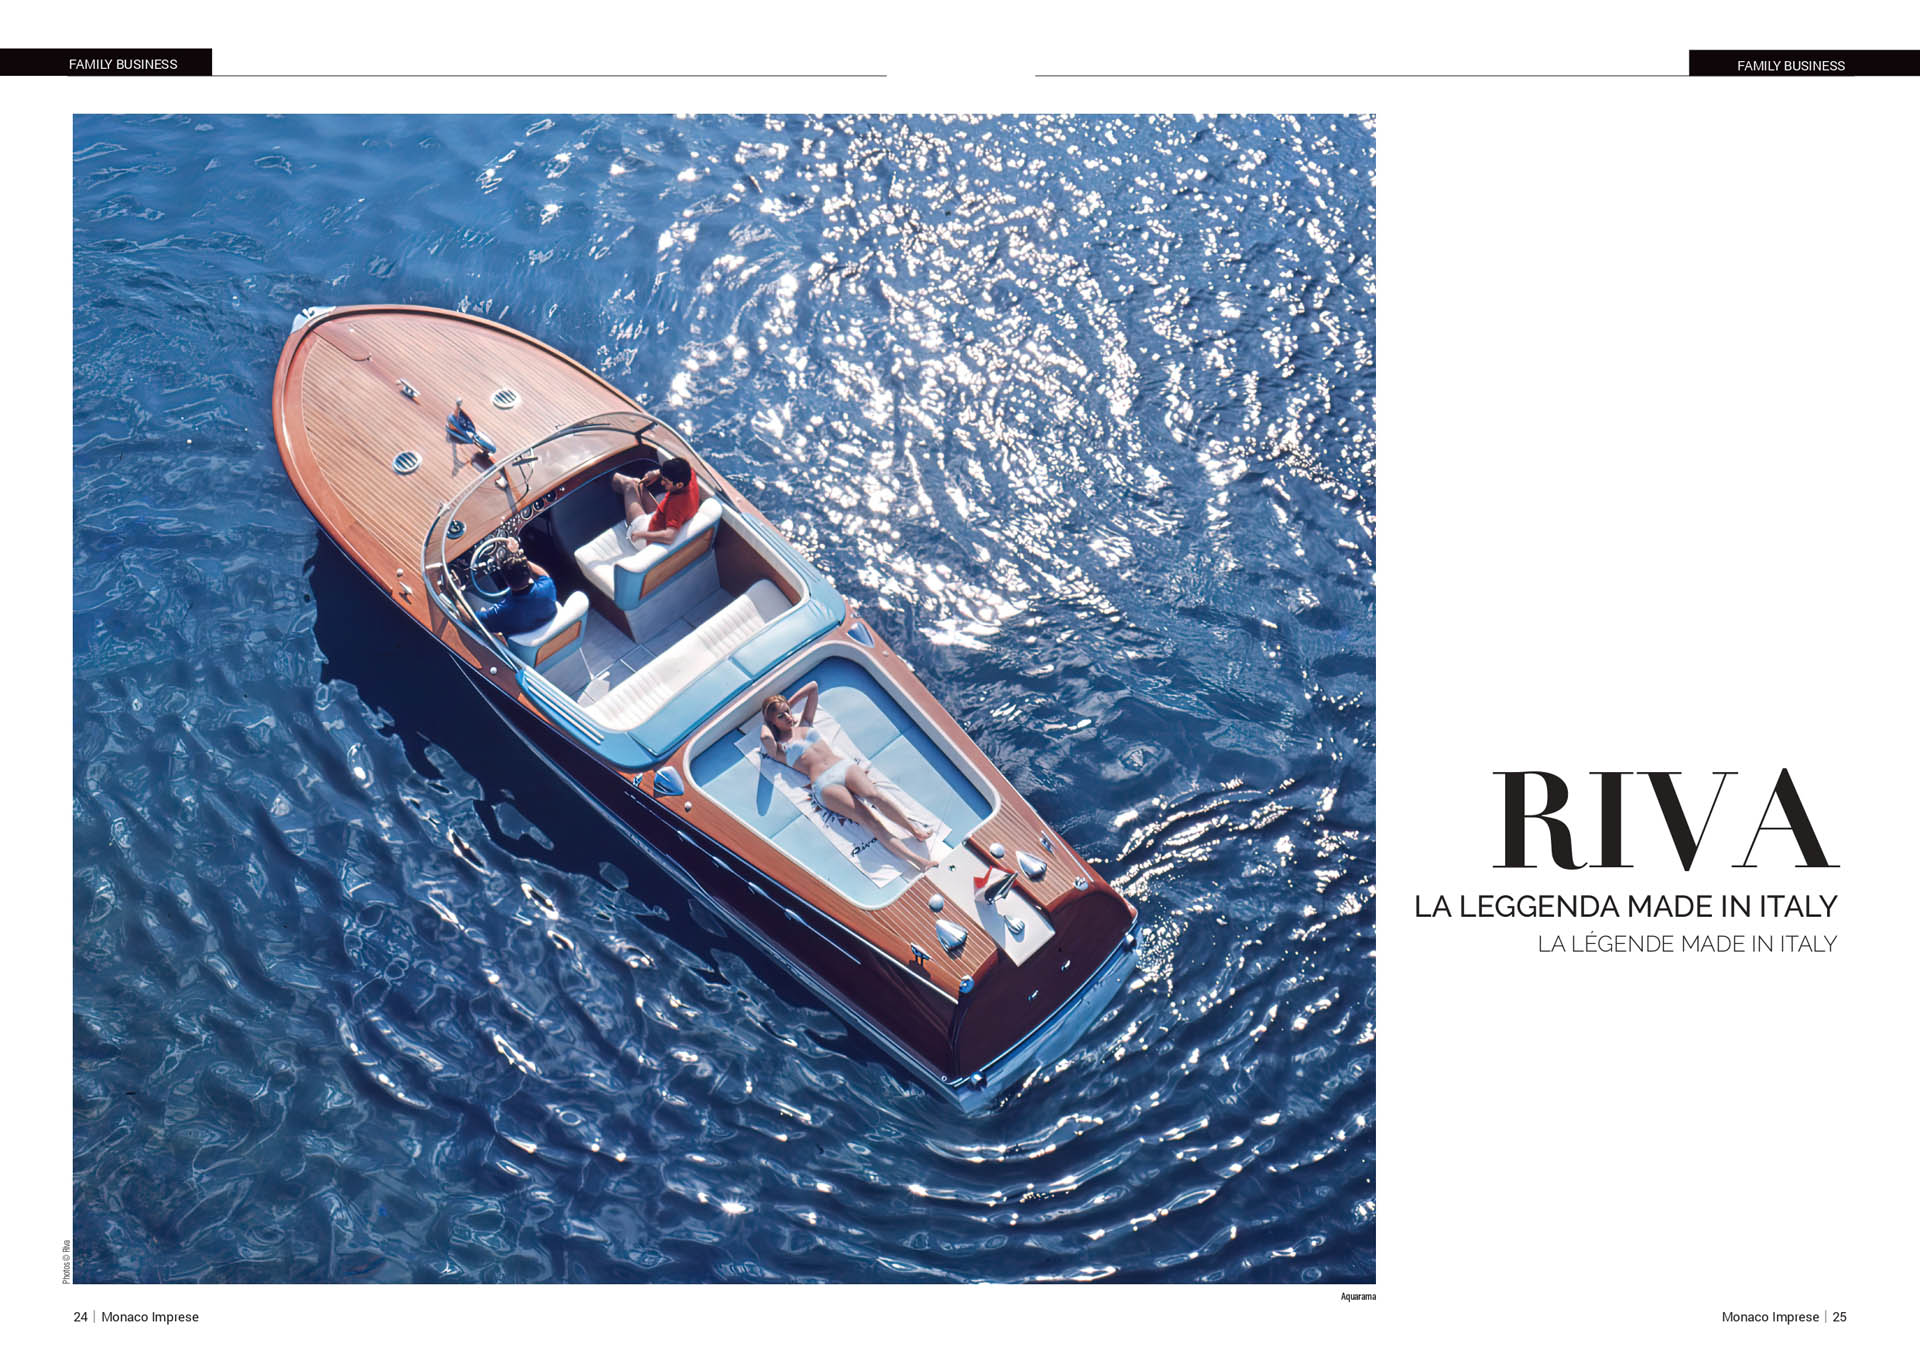 RIVA magazine Monaco Imprese 56_pages-to-jpg-0002